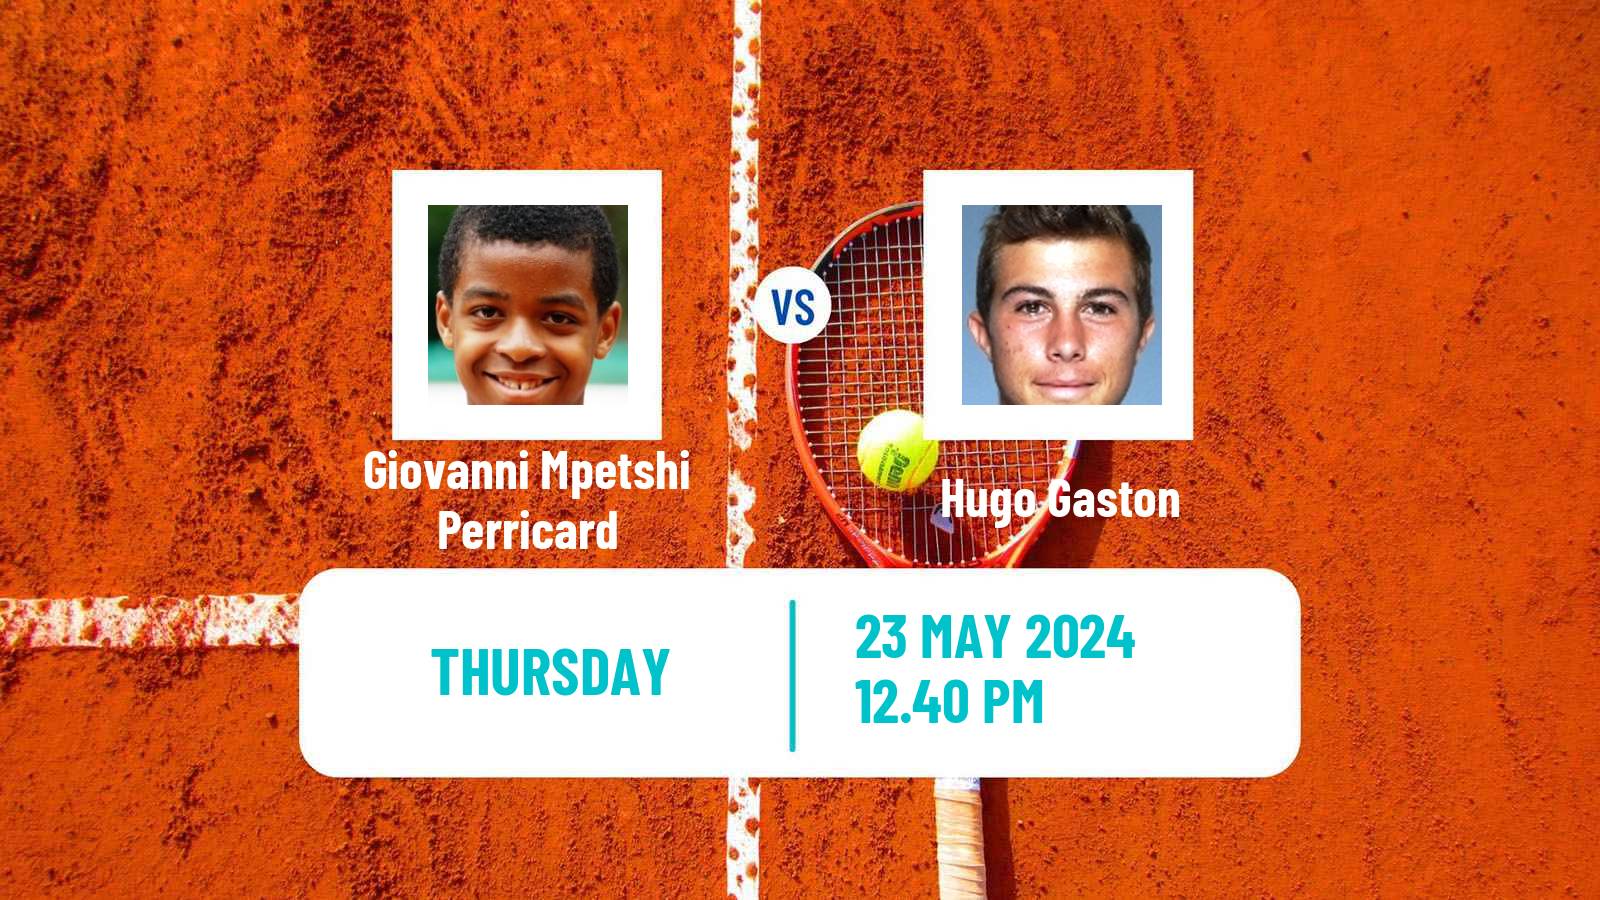 Tennis ATP Lyon Giovanni Mpetshi Perricard - Hugo Gaston